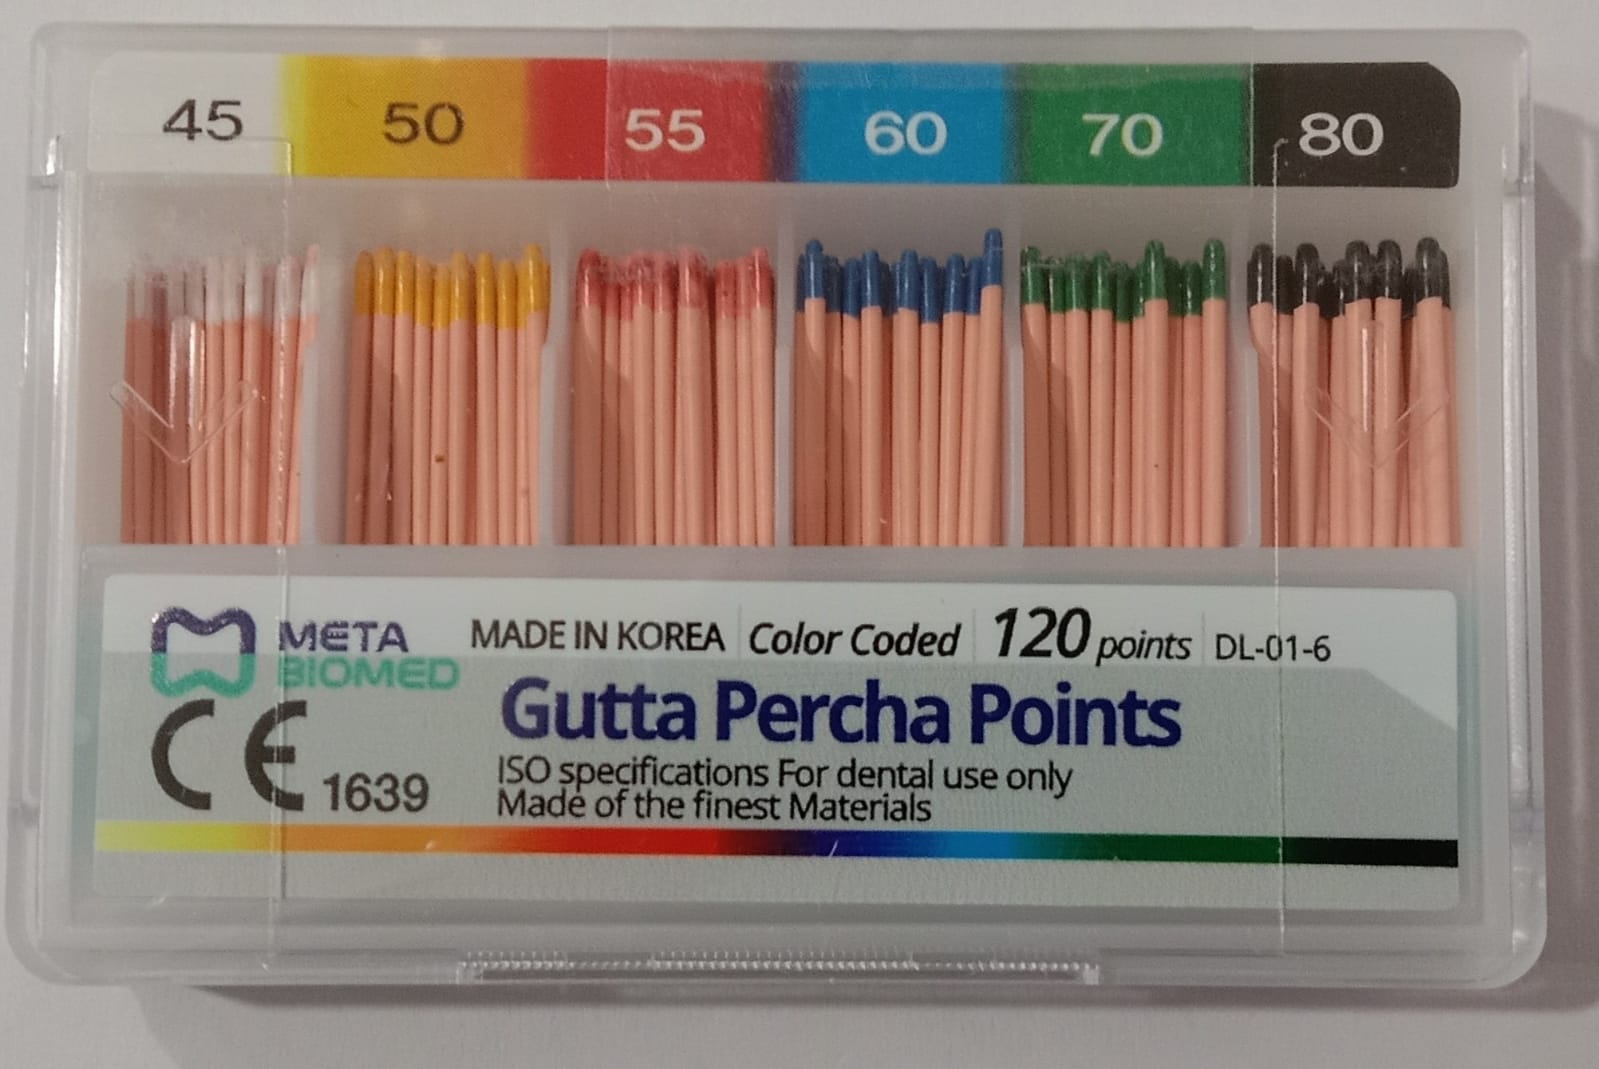 Meta Biomed Gutta Percha Points 45-80 2%